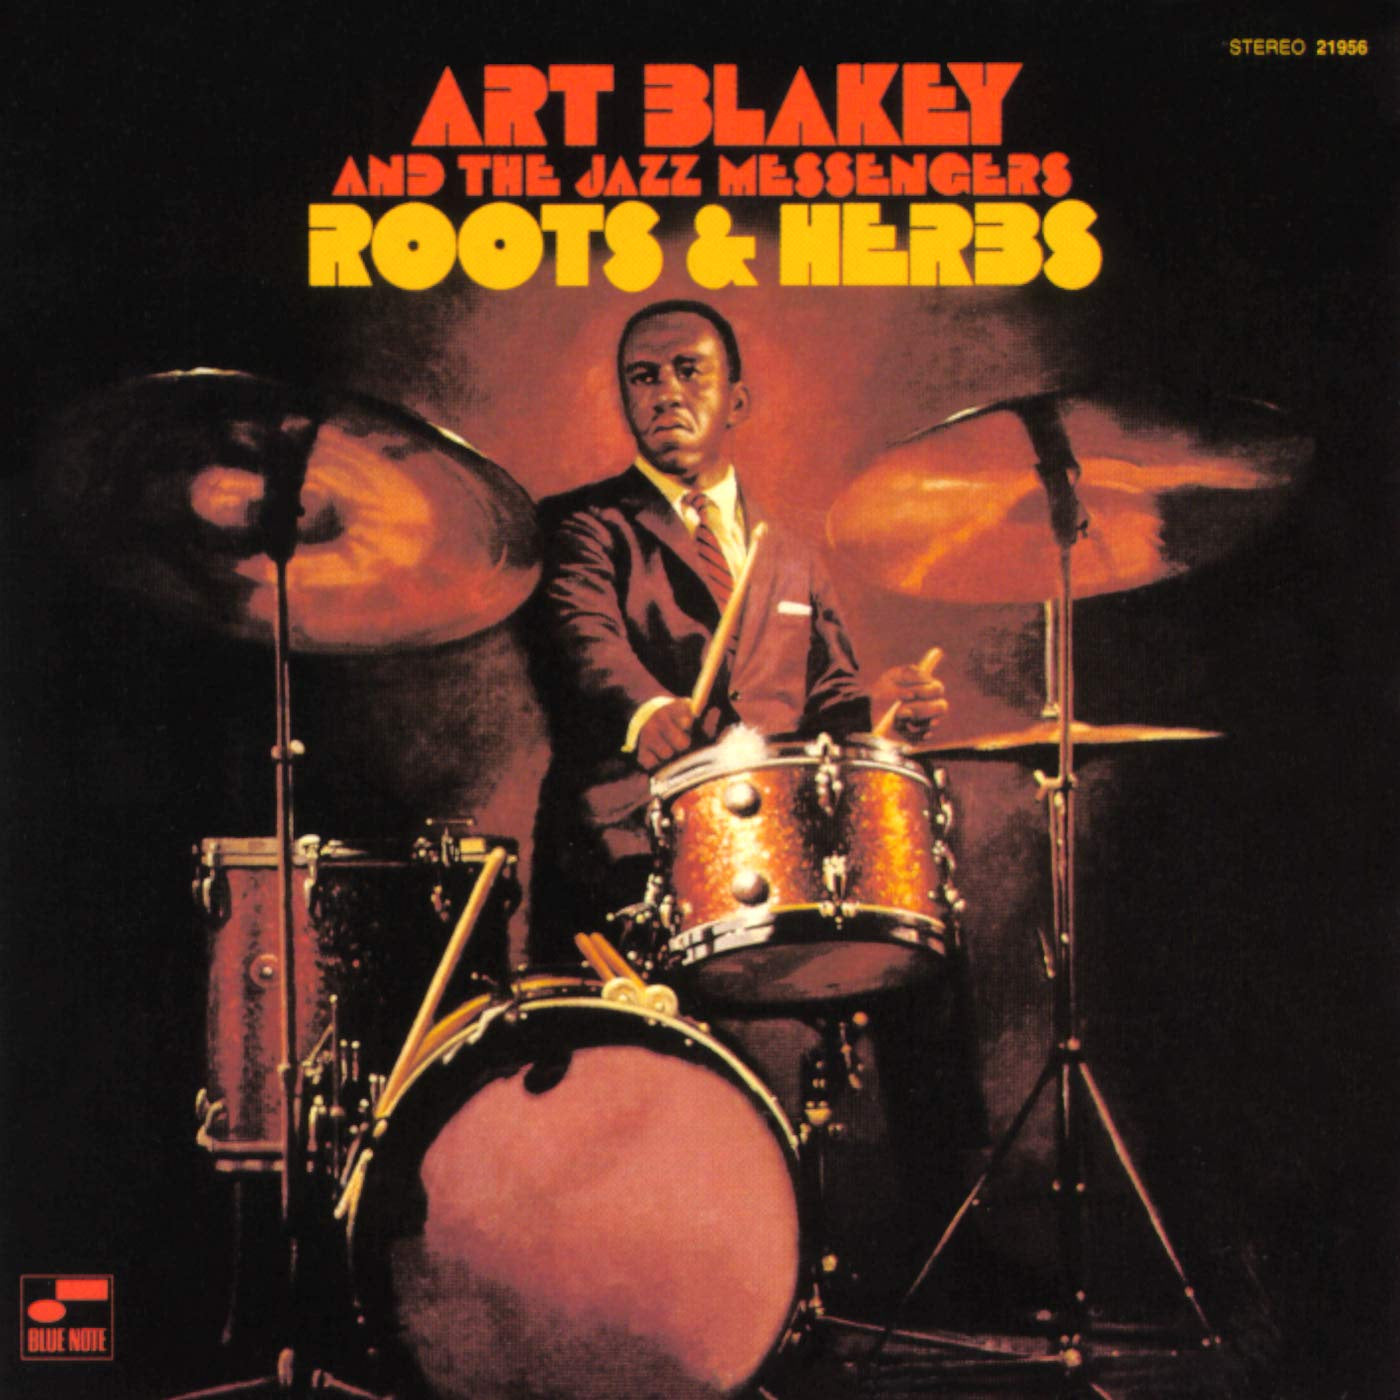 Art Blakey & The Jazz Messengers ‎– Roots & Herbs (1970) - New LP Record 2020 Blue Note Tone Poet Series 180 gram Vinyl Reissue - Hard Bop / Modal